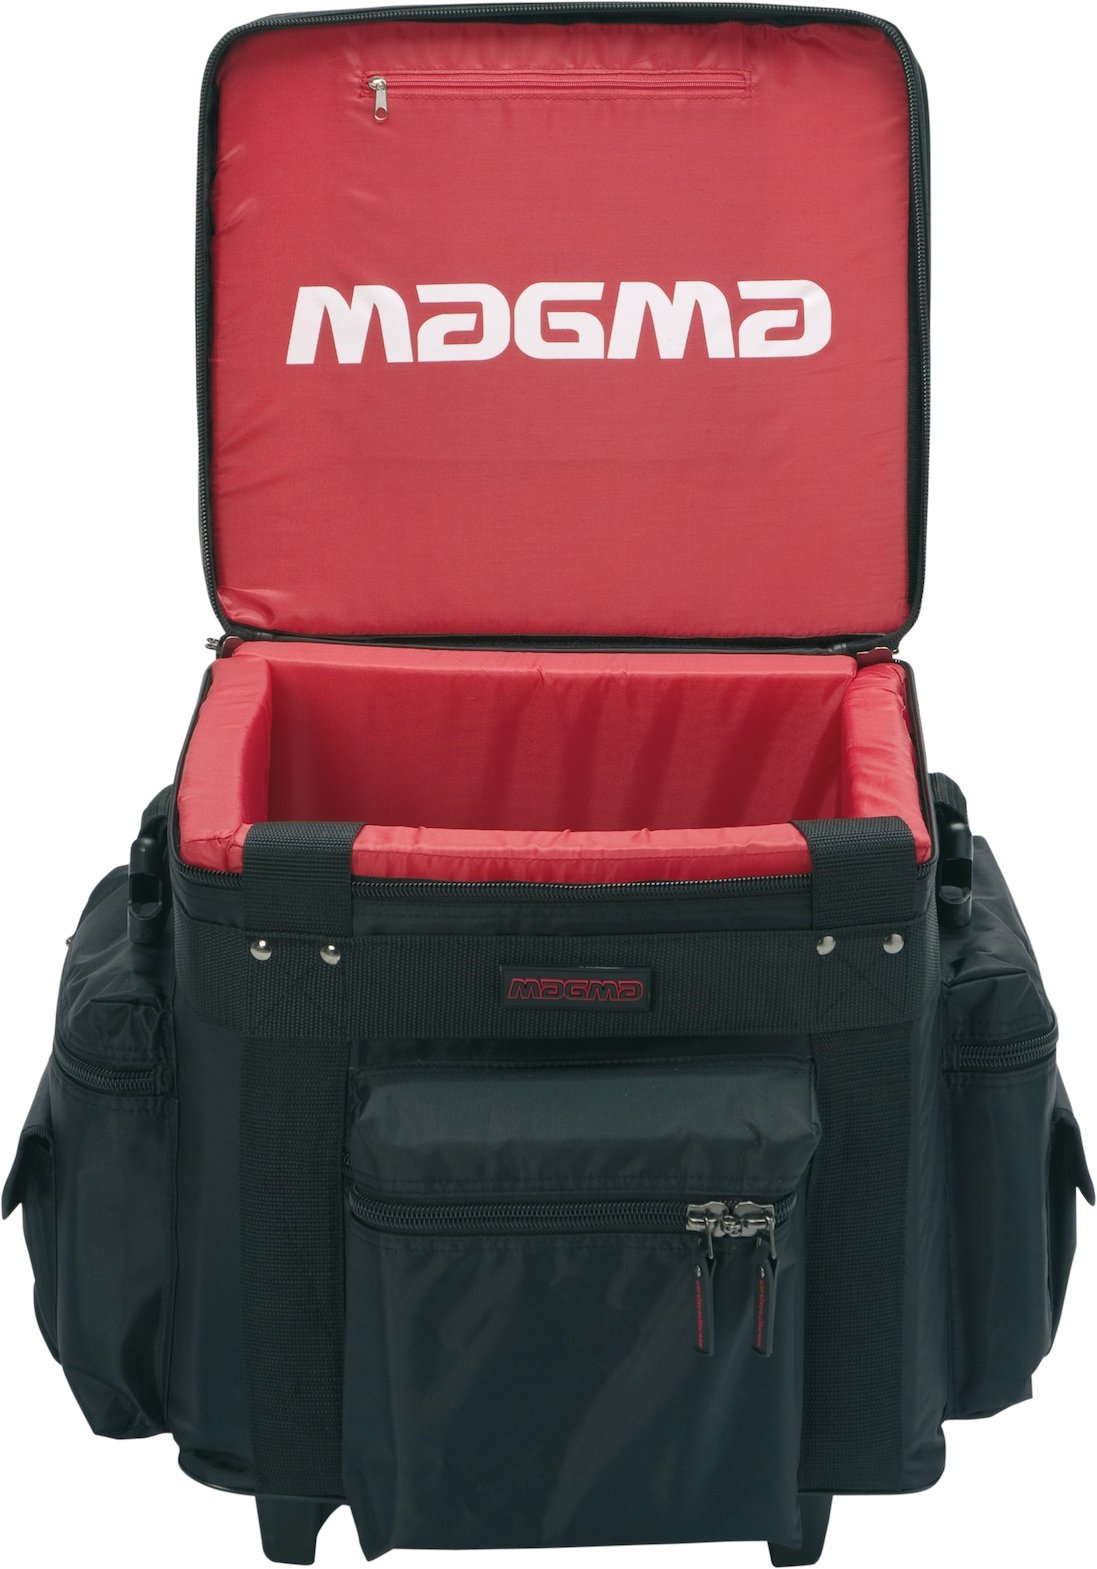 Magma LP 100 Trolley Black / Red 40540